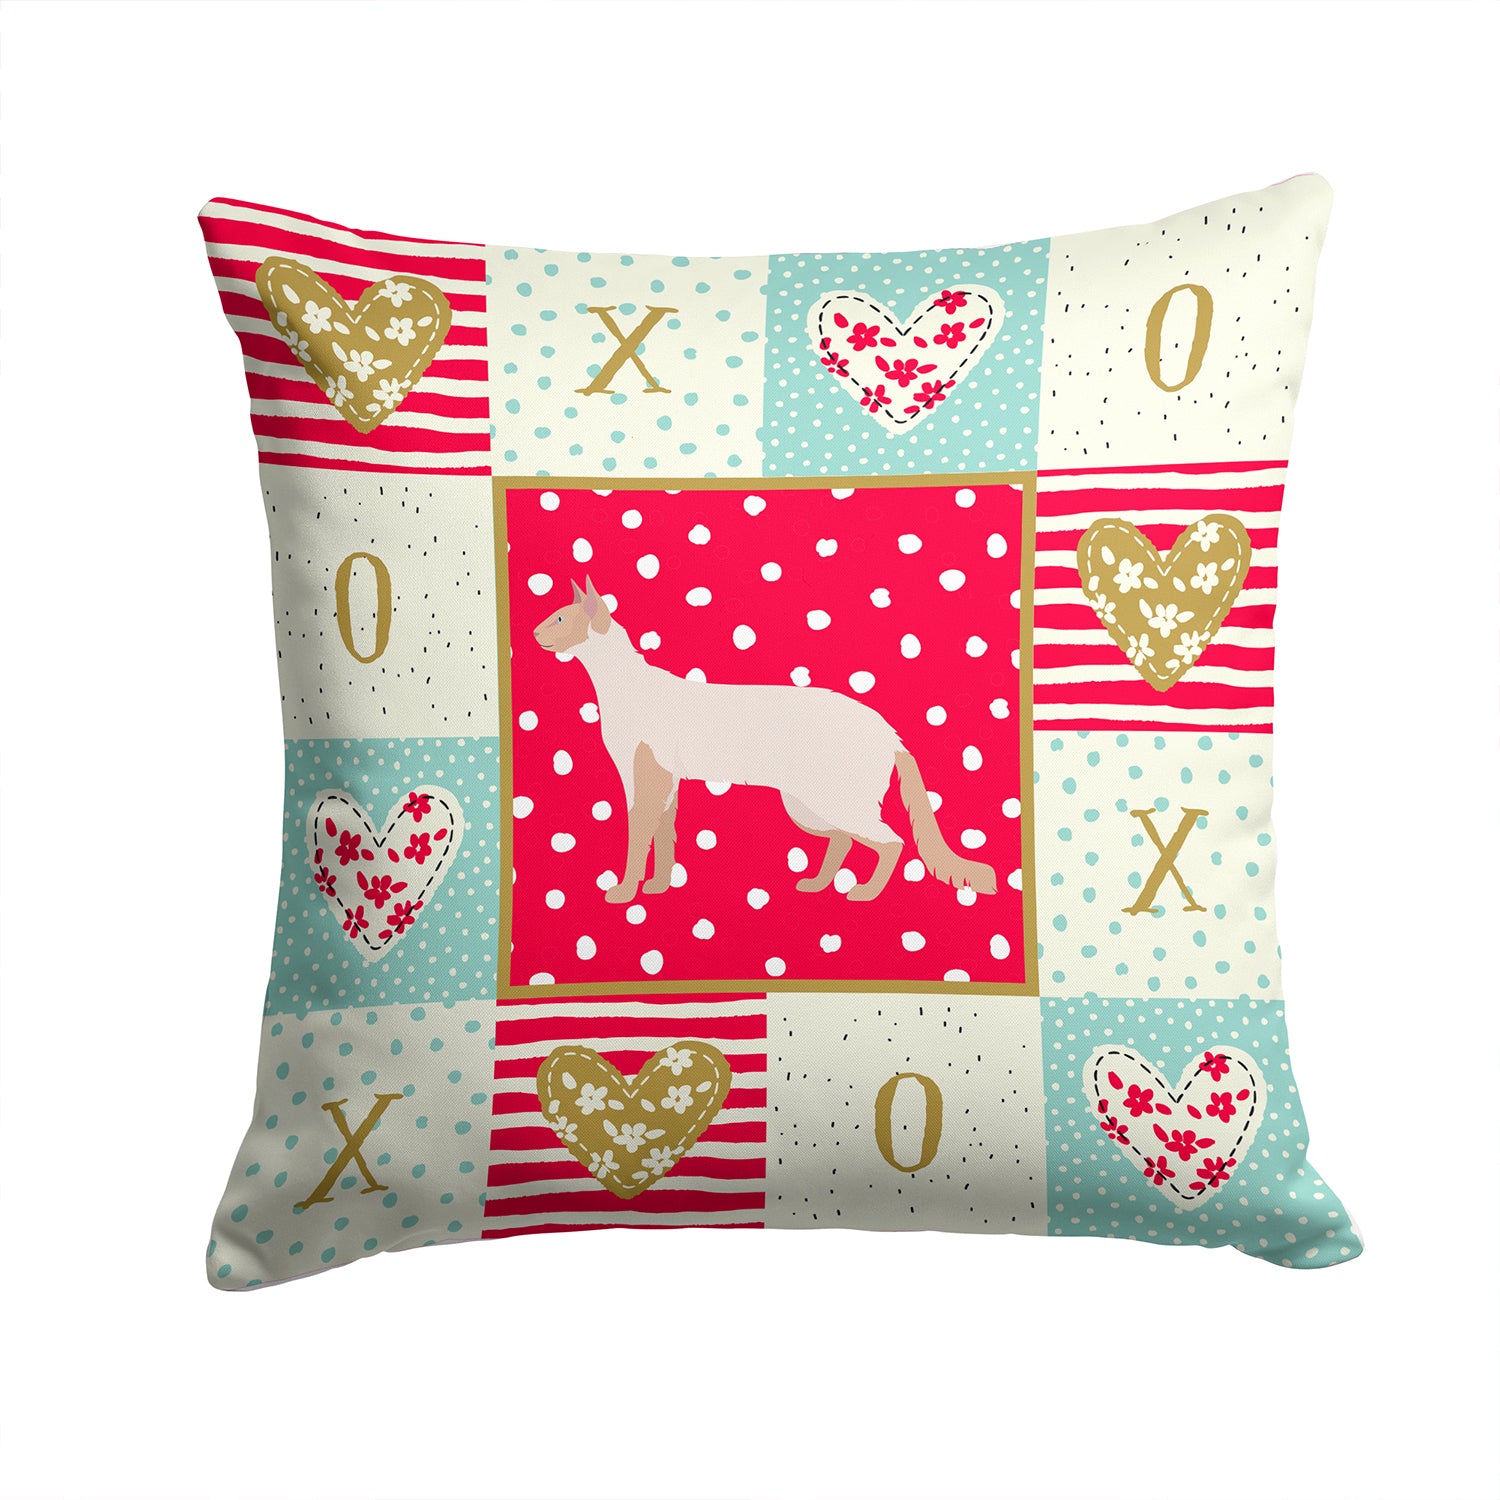 Colorpoint Longhair #2 Cat Love Fabric Decorative Pillow CK5585PW1414 - the-store.com